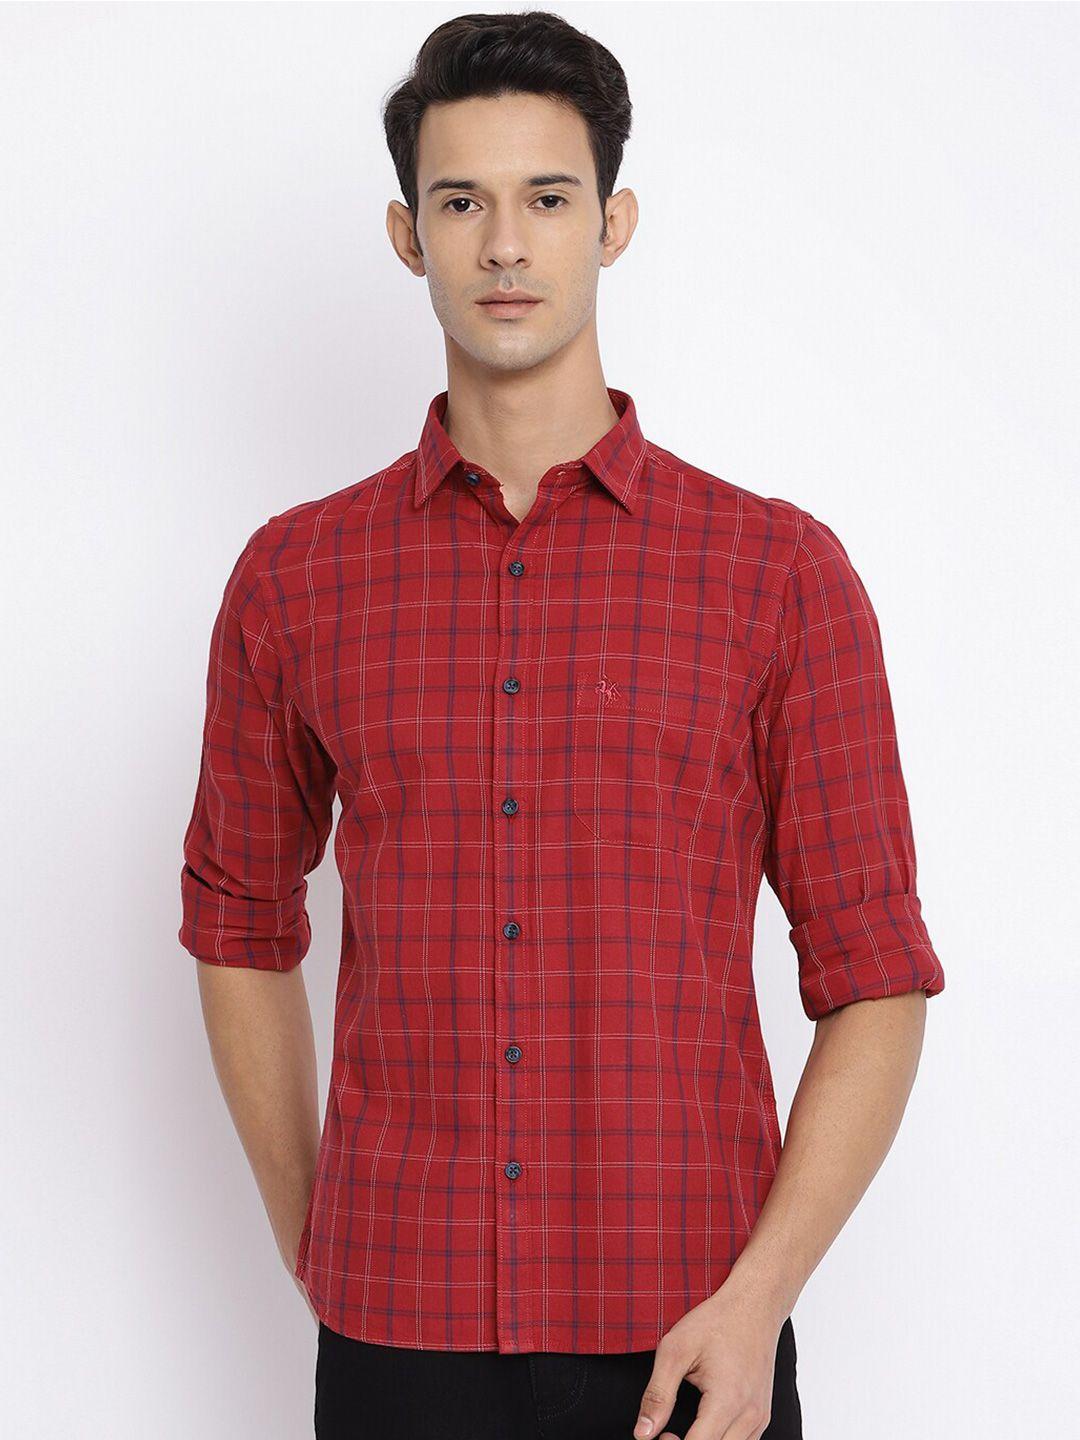 cantabil-men-maroon-tartan-checked-cotton-casual-shirt